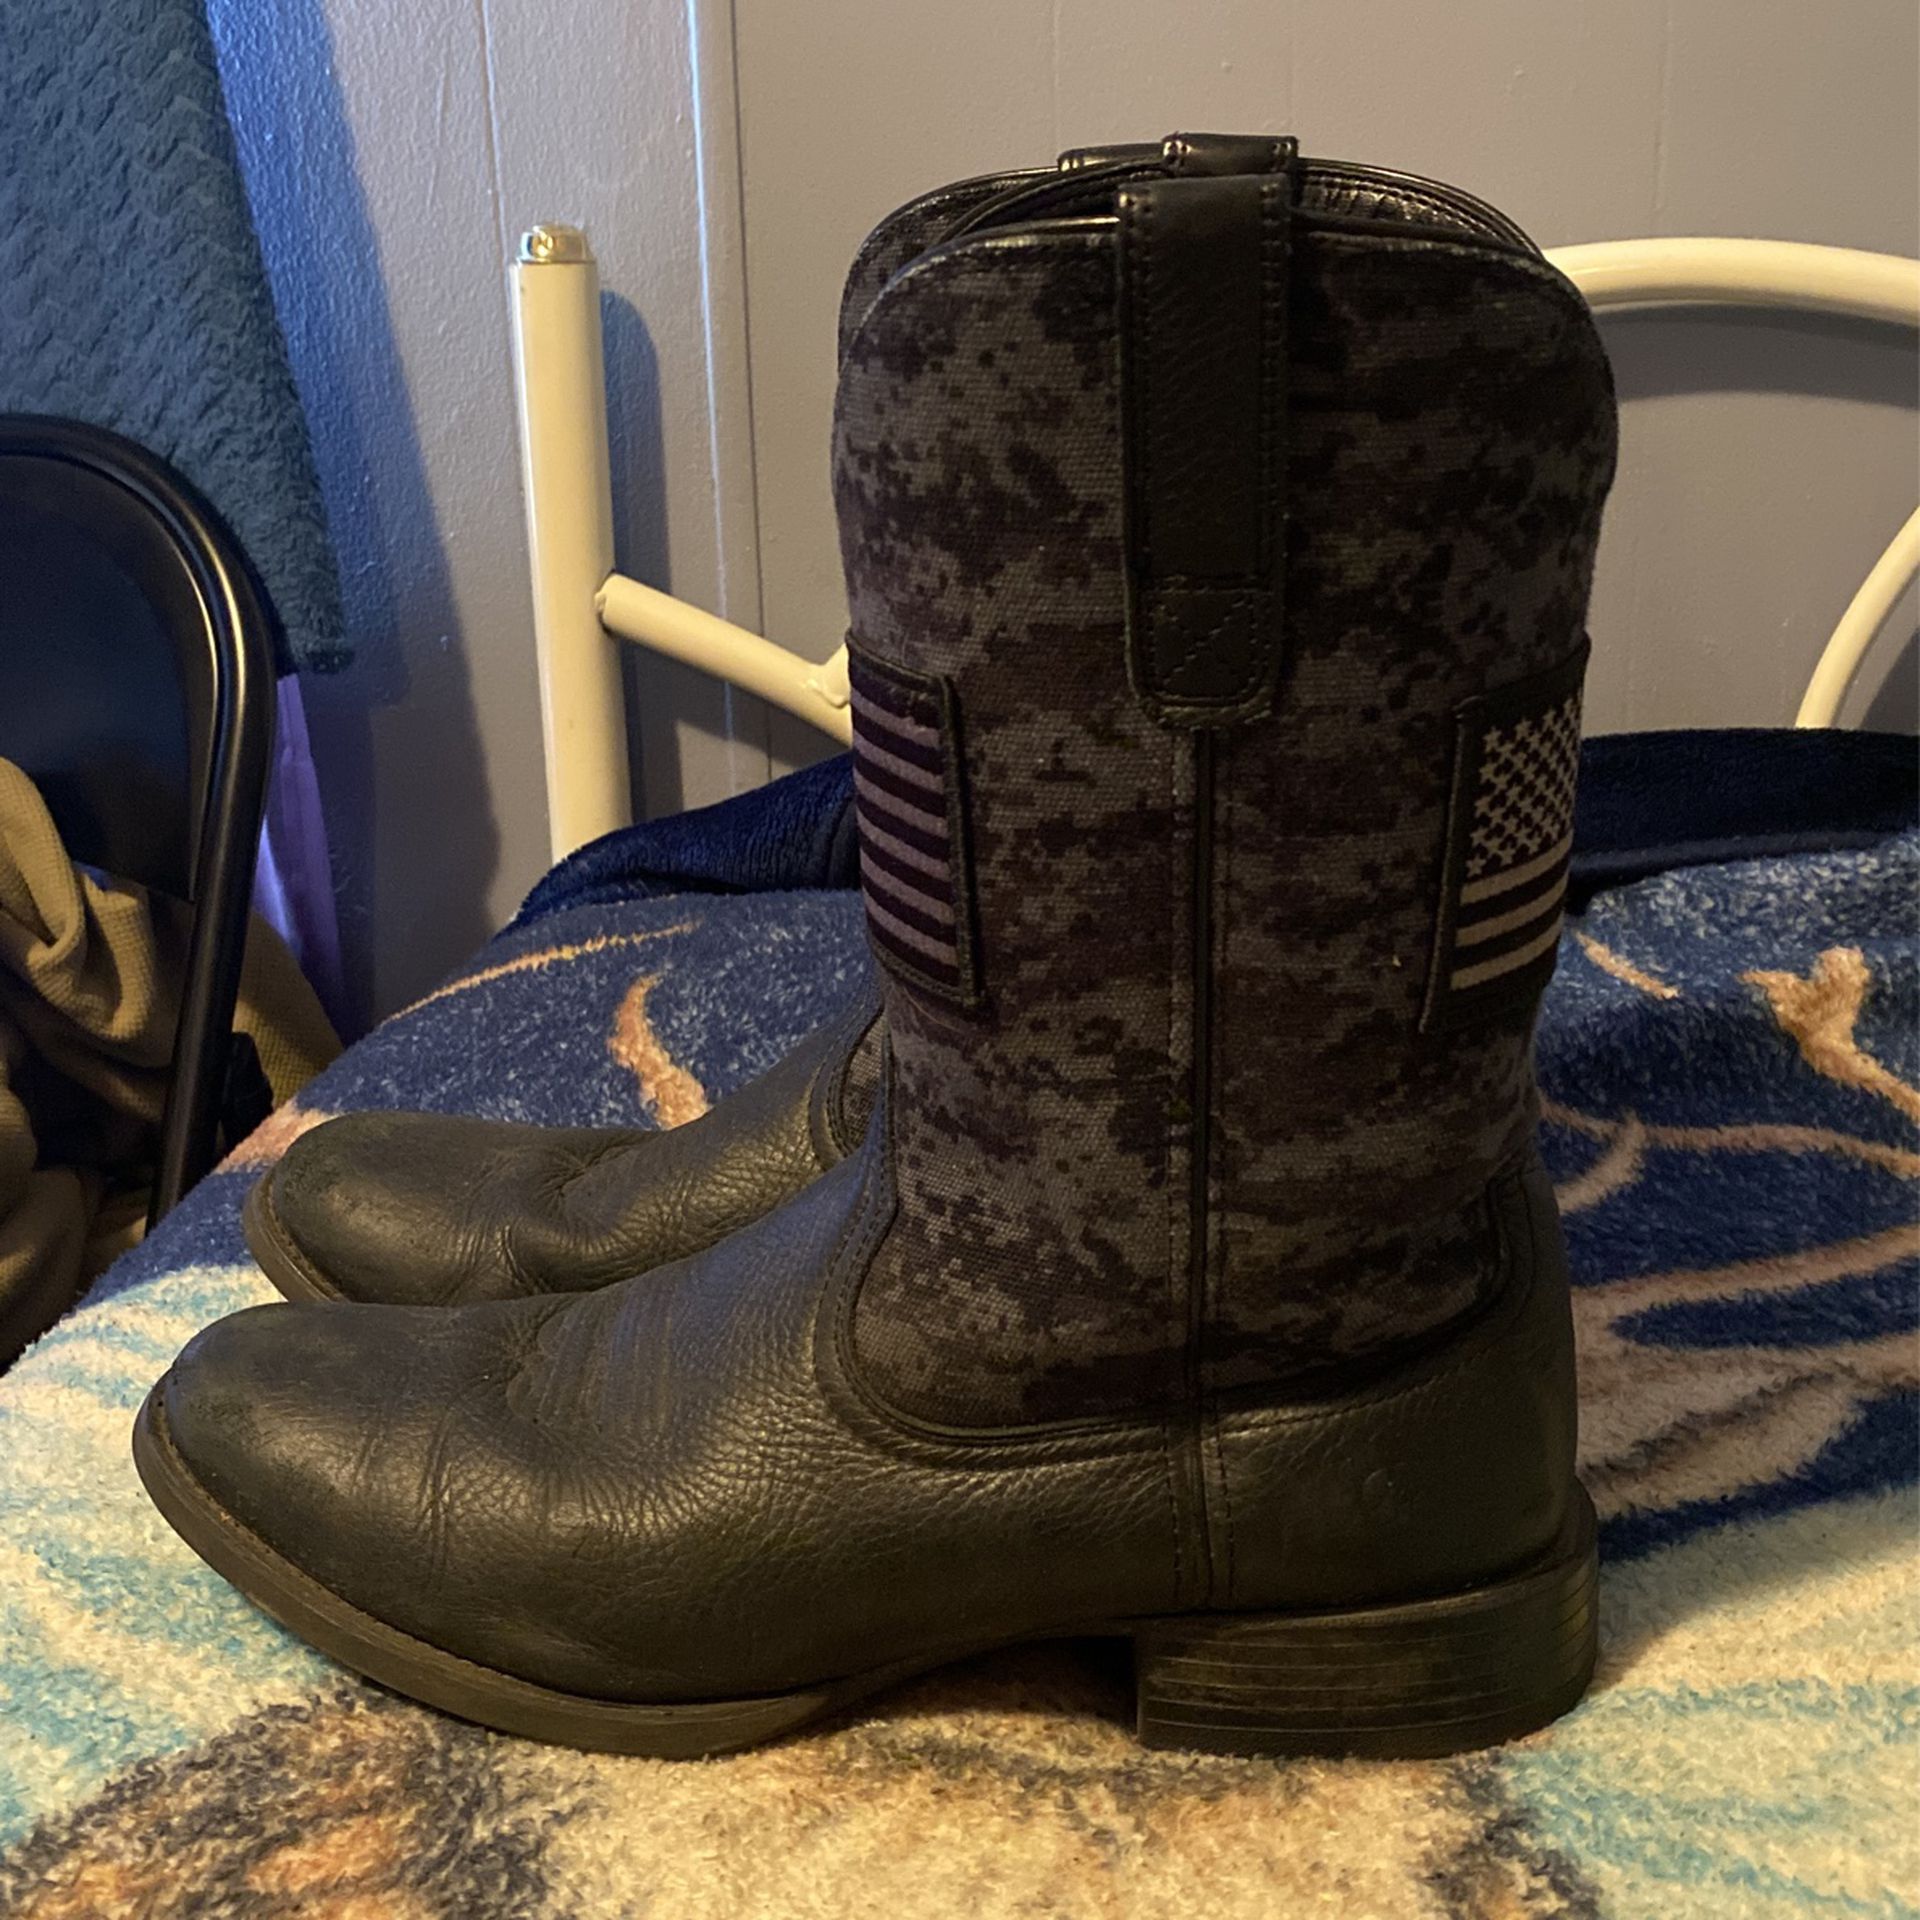 Ariat Boots Size 12D